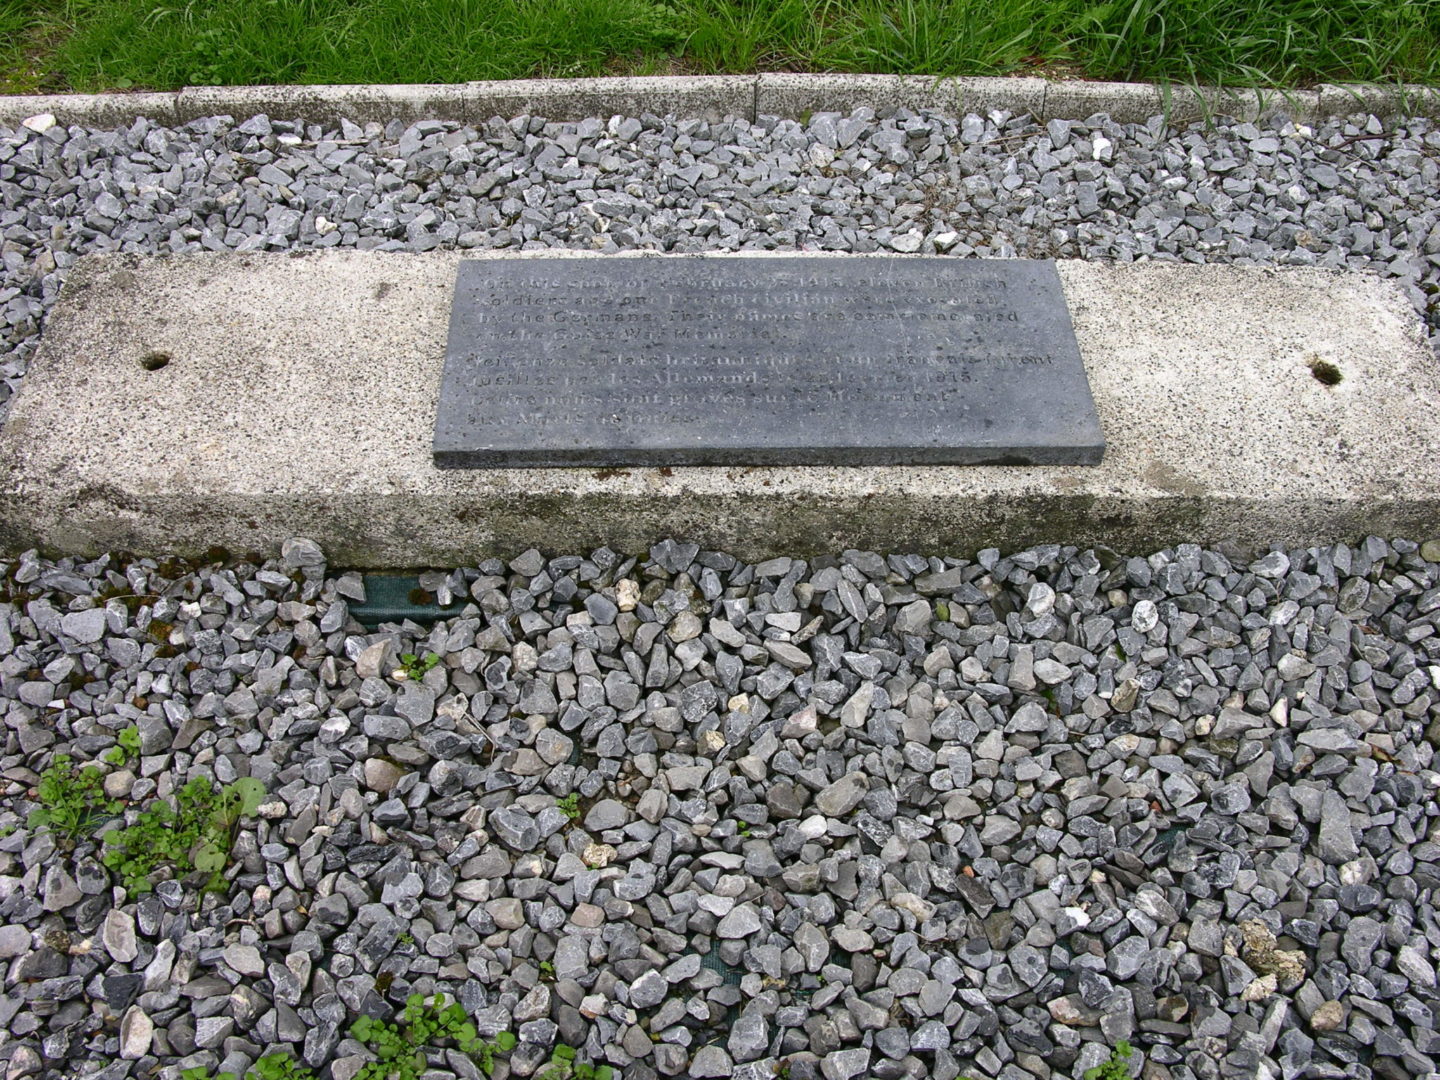 The execution spot plaque